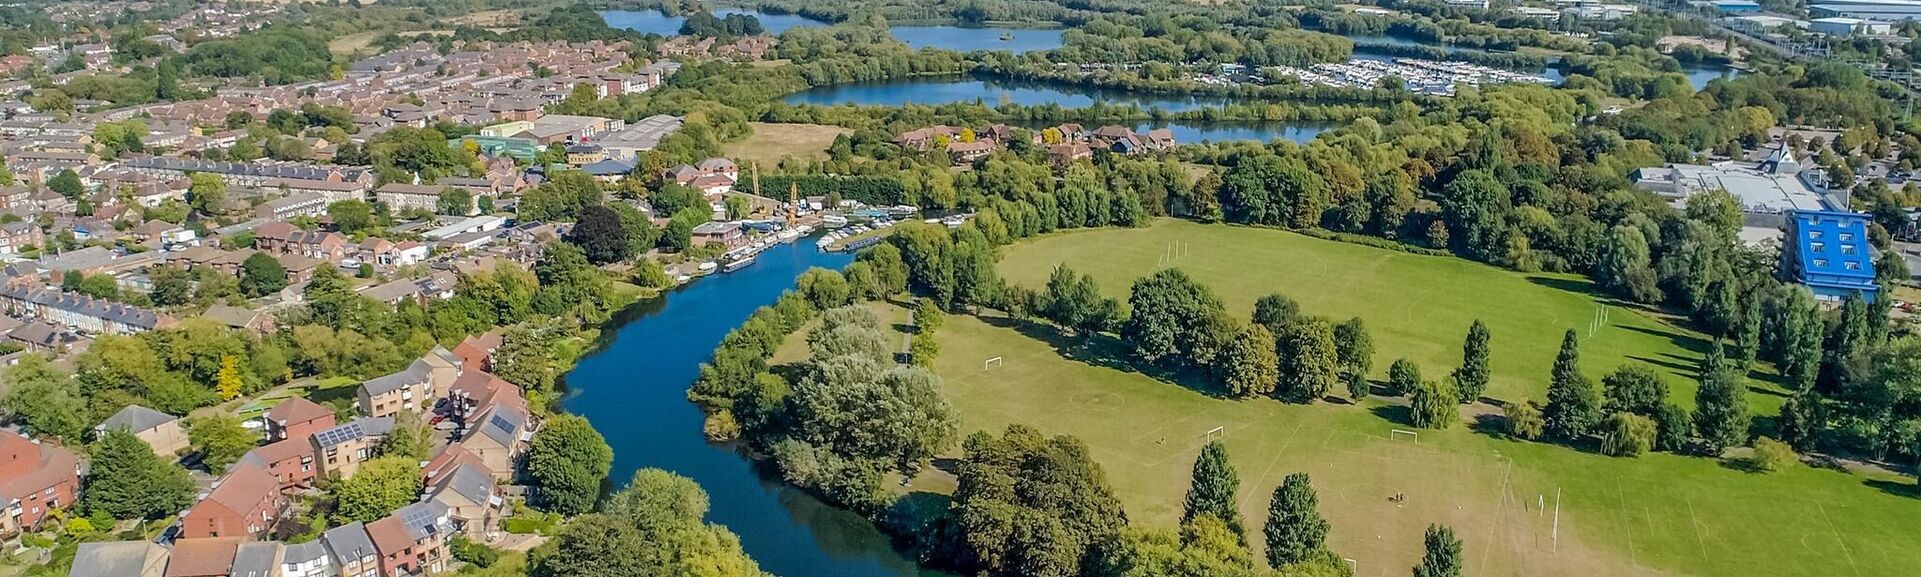 Aerial view of river running through Reading, UK